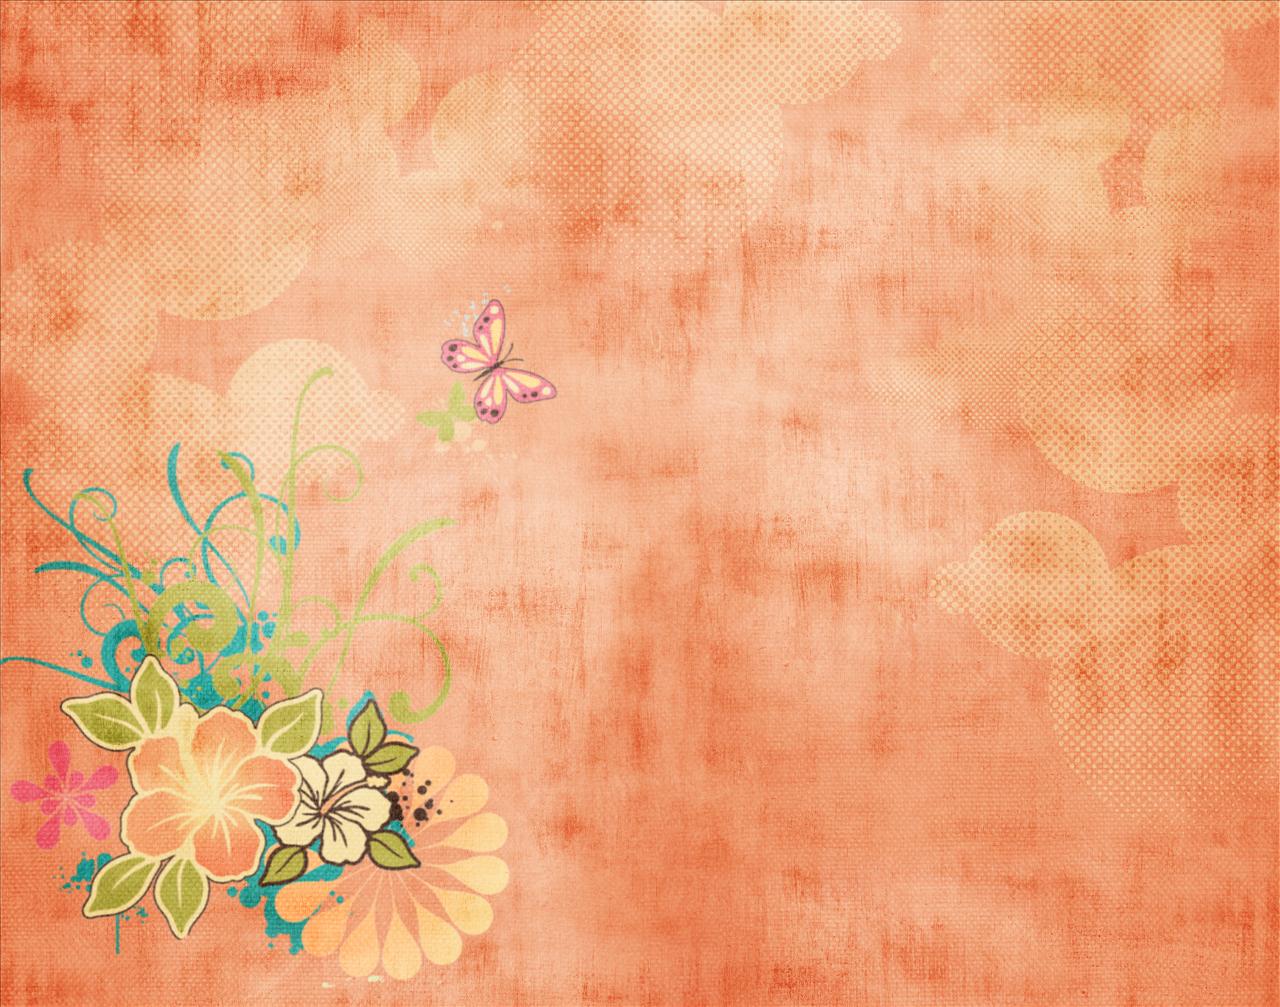 Flowers on Orange Backgrounds